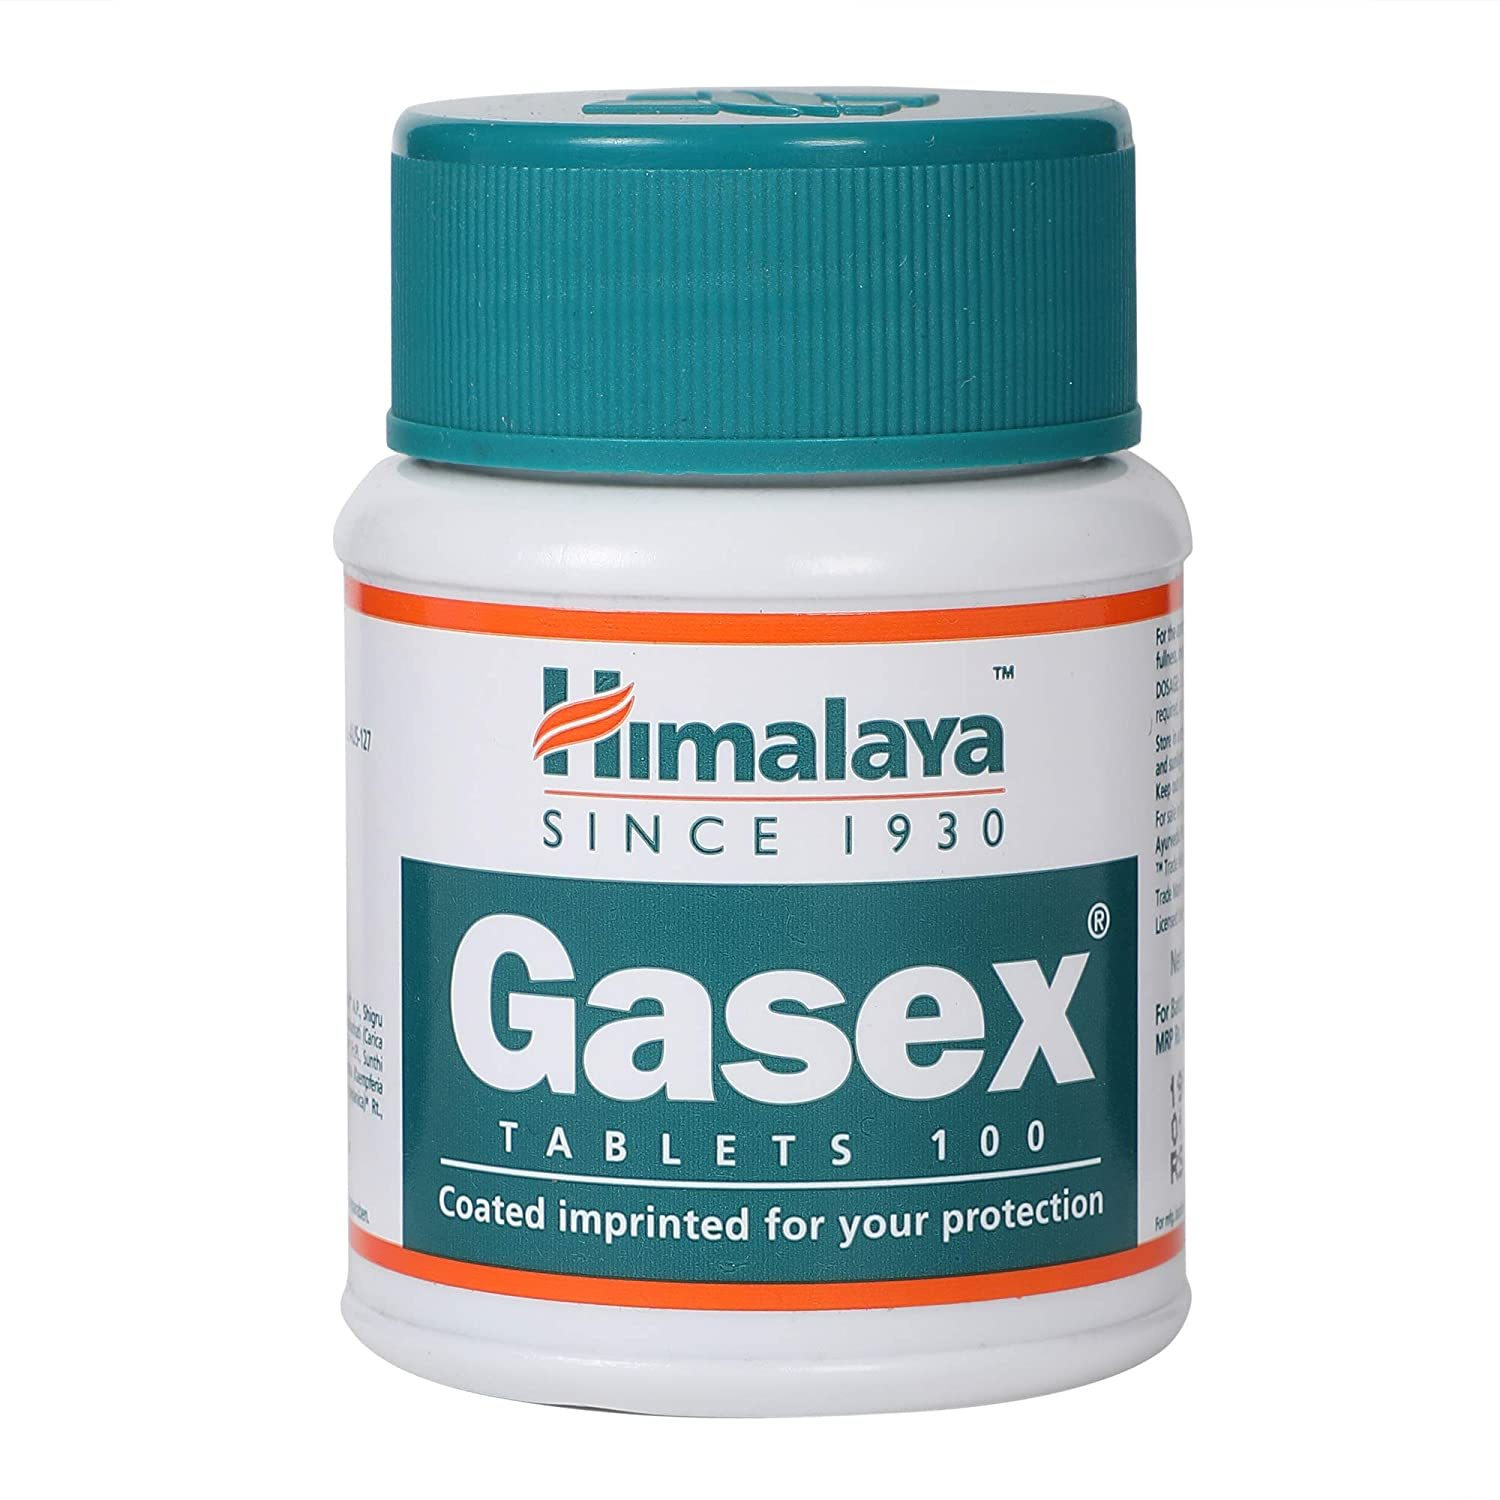 Himalaya Gasex Tablets 100 capsules